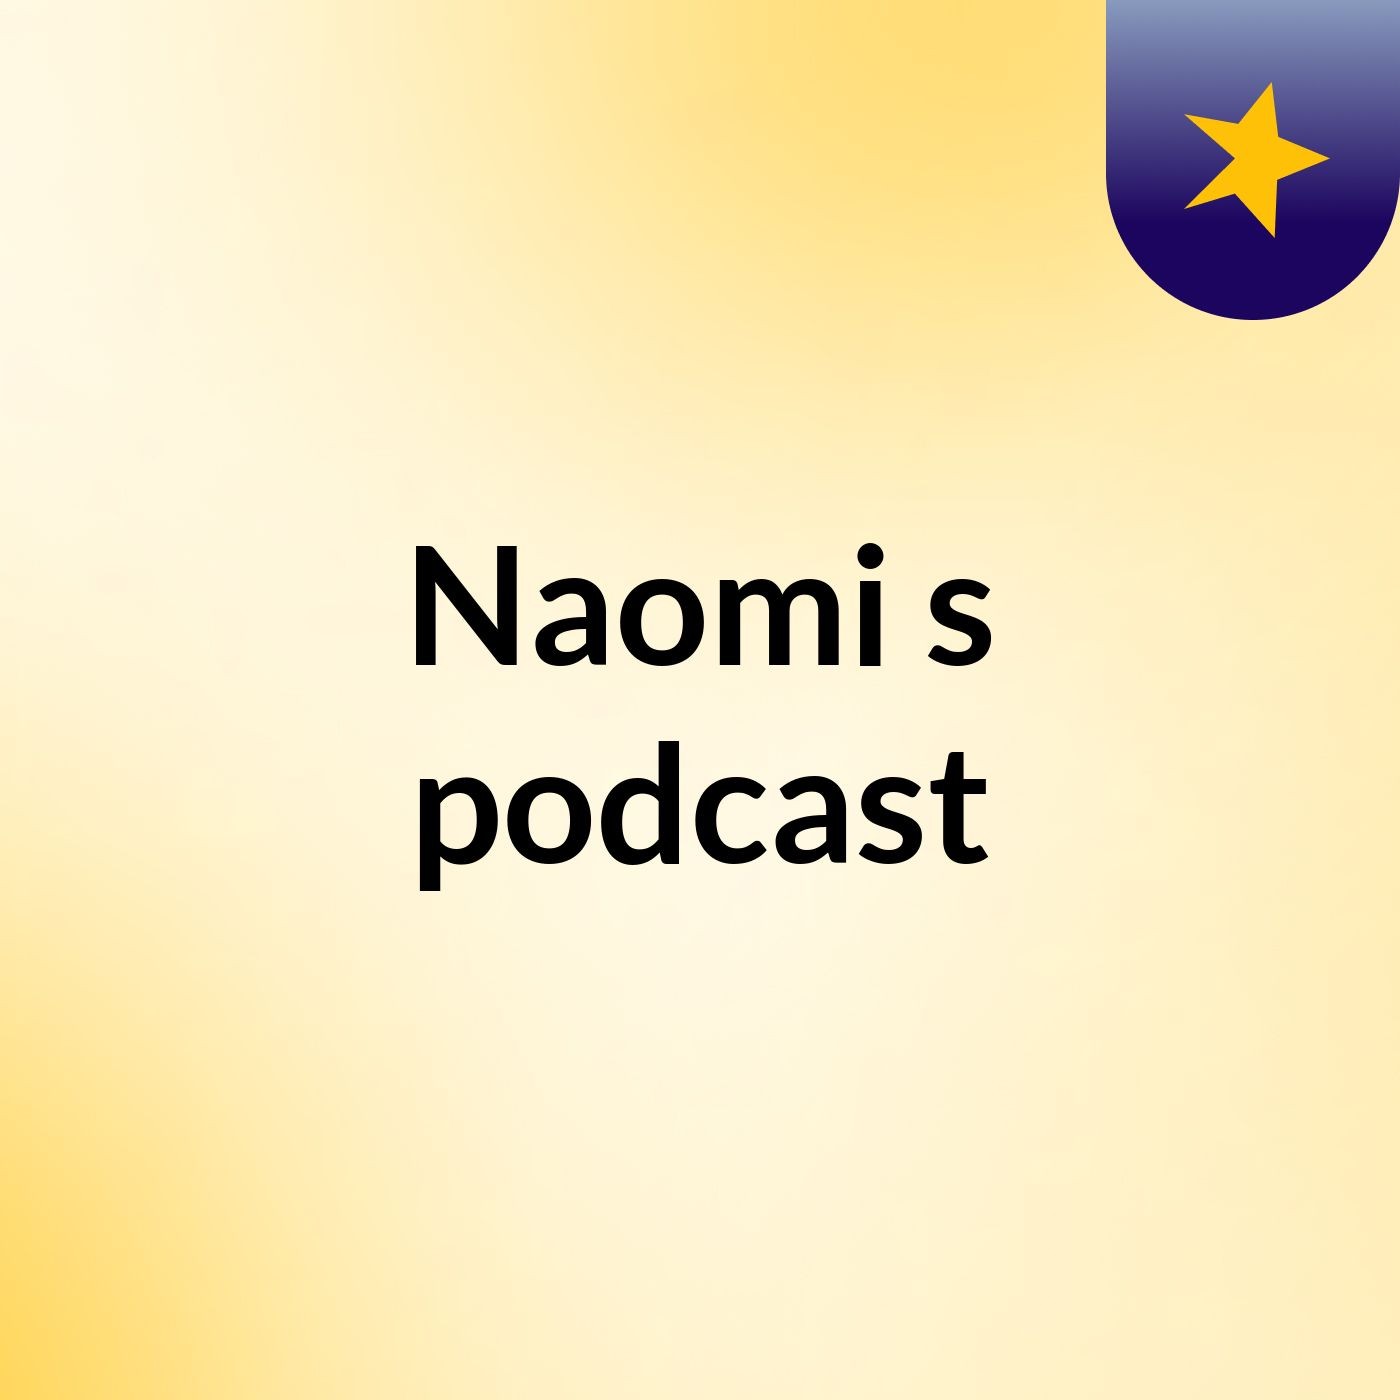 Naomi's podcast